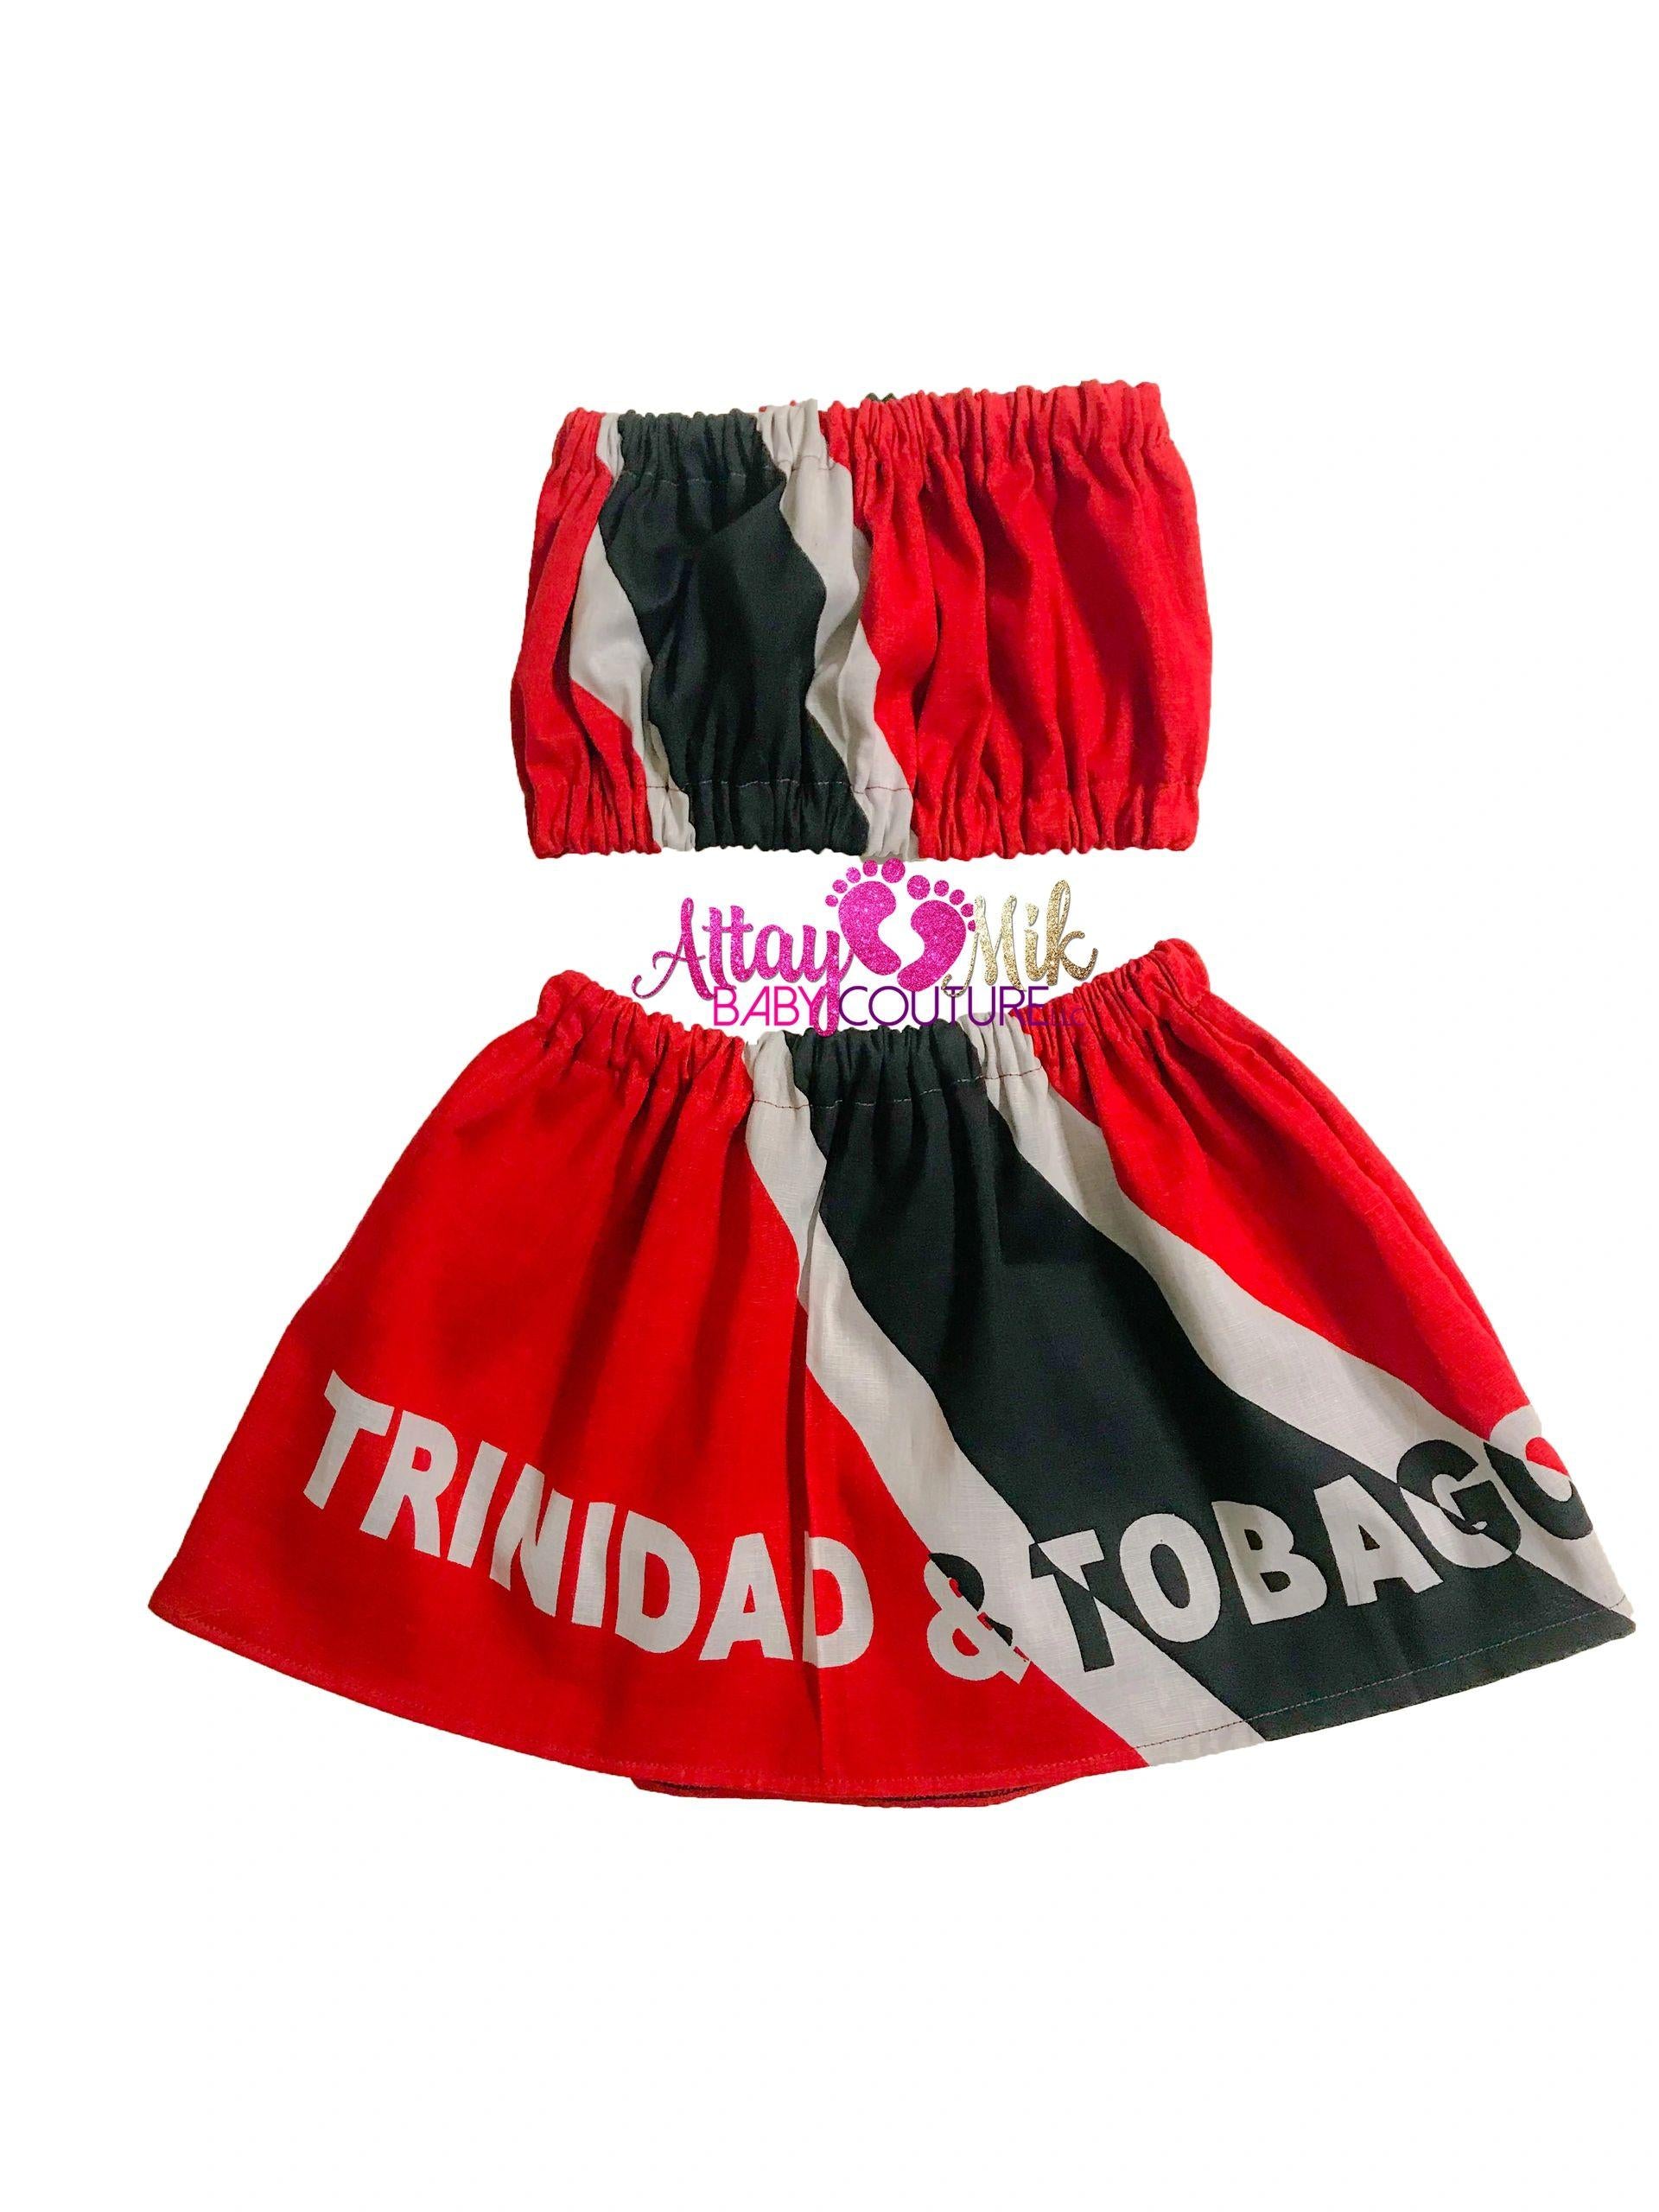 Trinidad and tobago flag clothing 